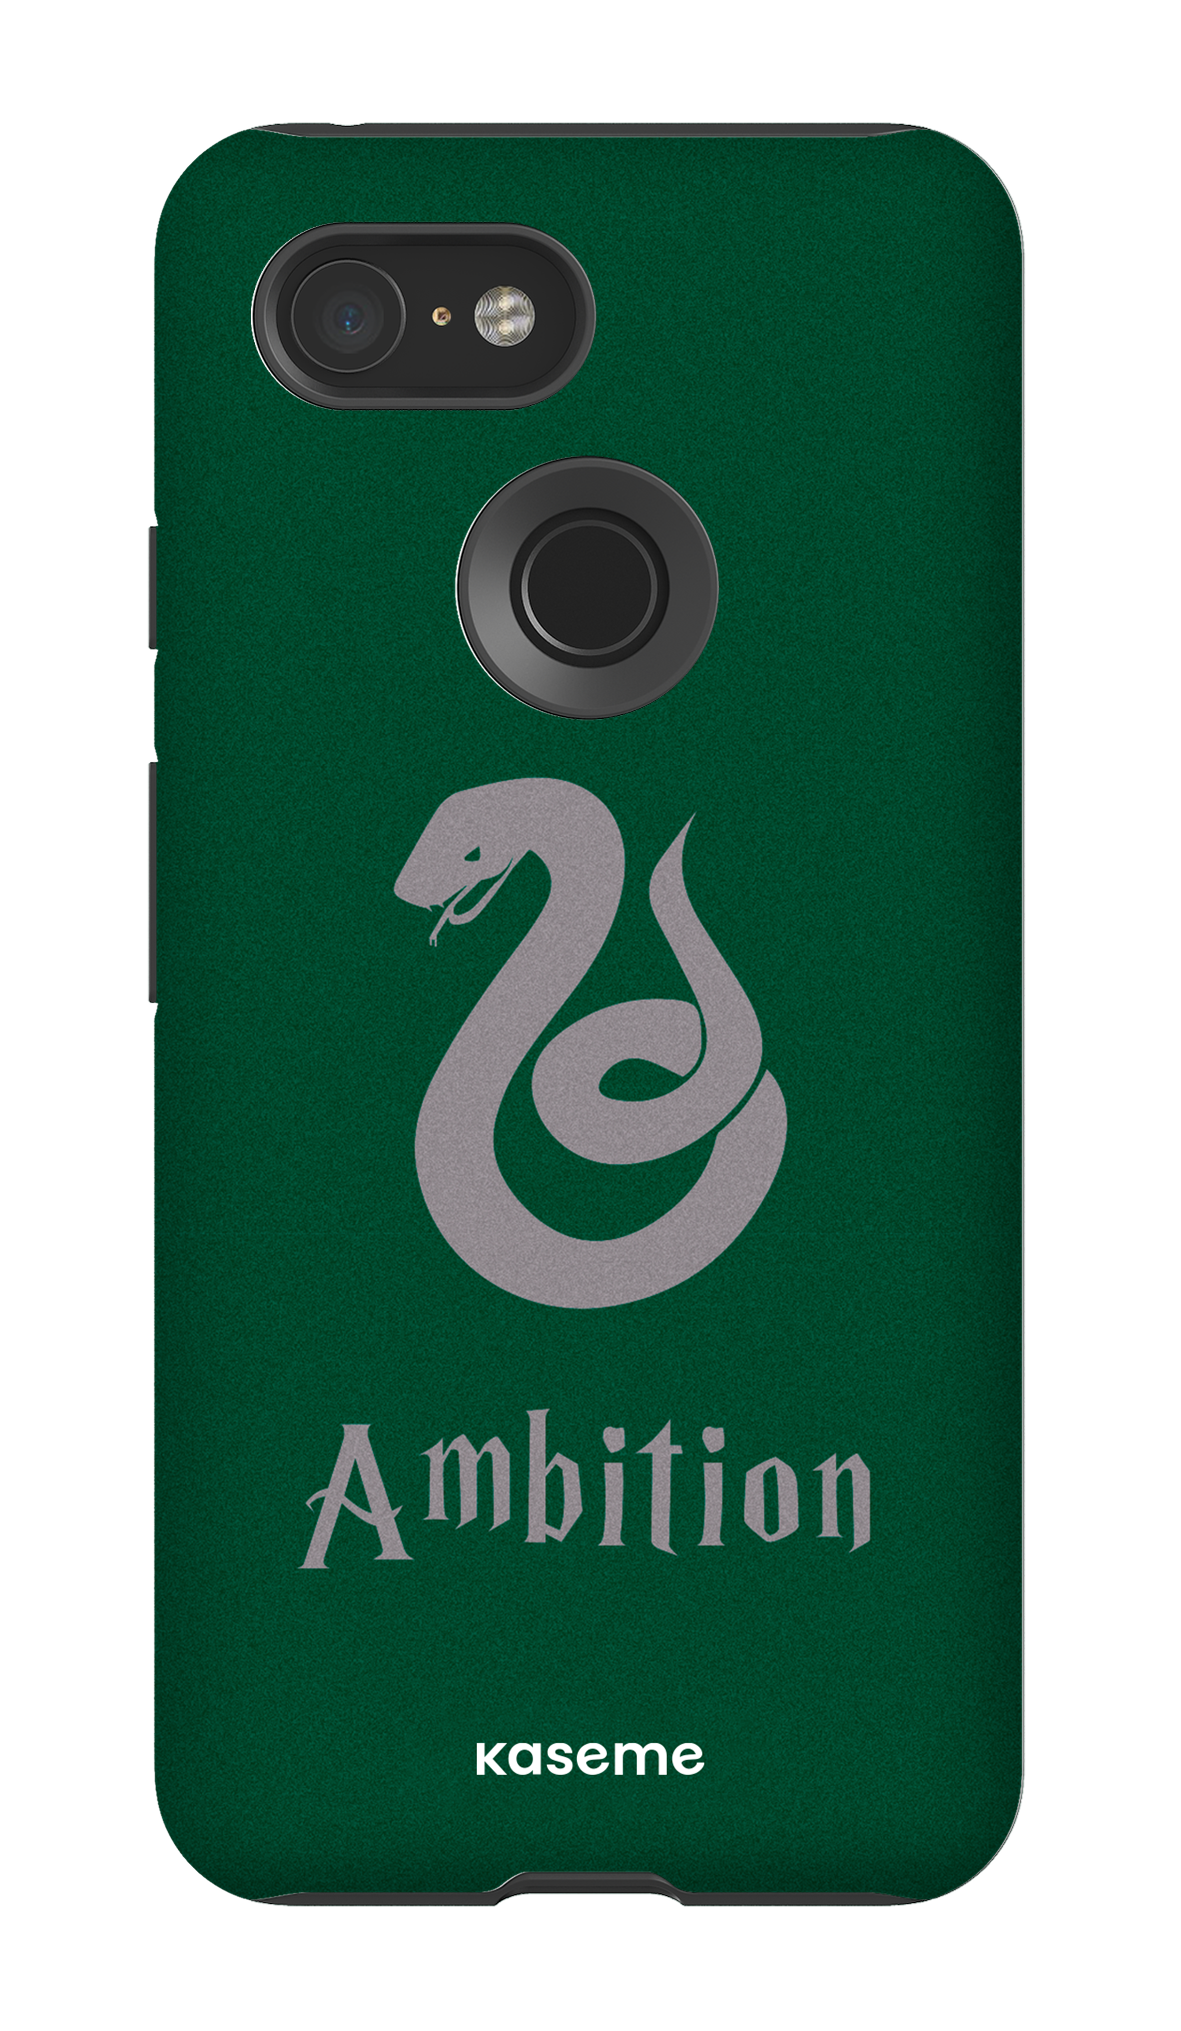 Ambition - Google Pixel 3